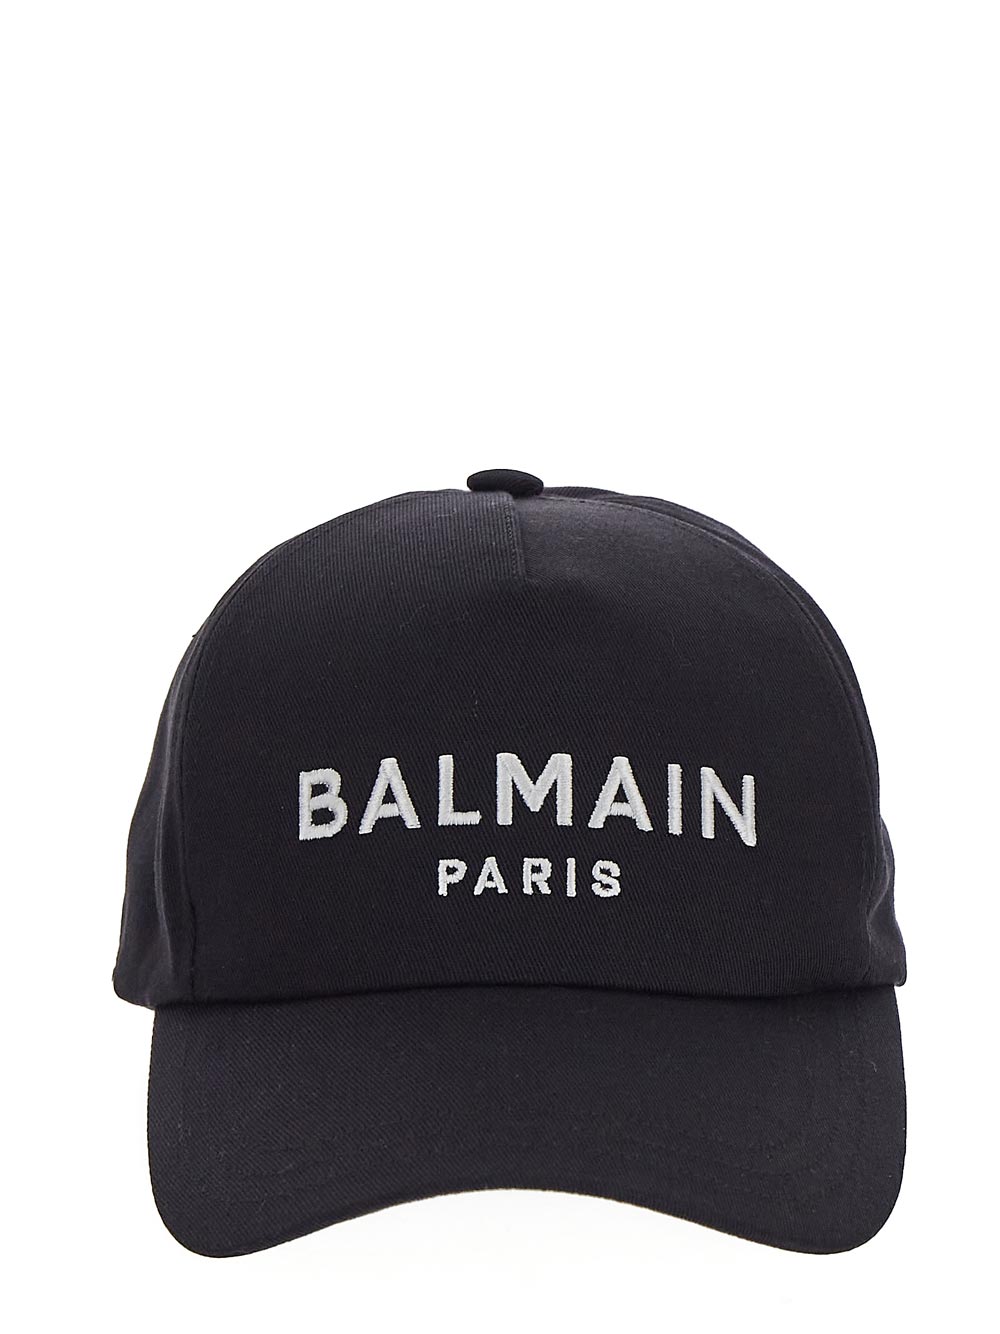 BALMAIN Cap BLACK/WHITE